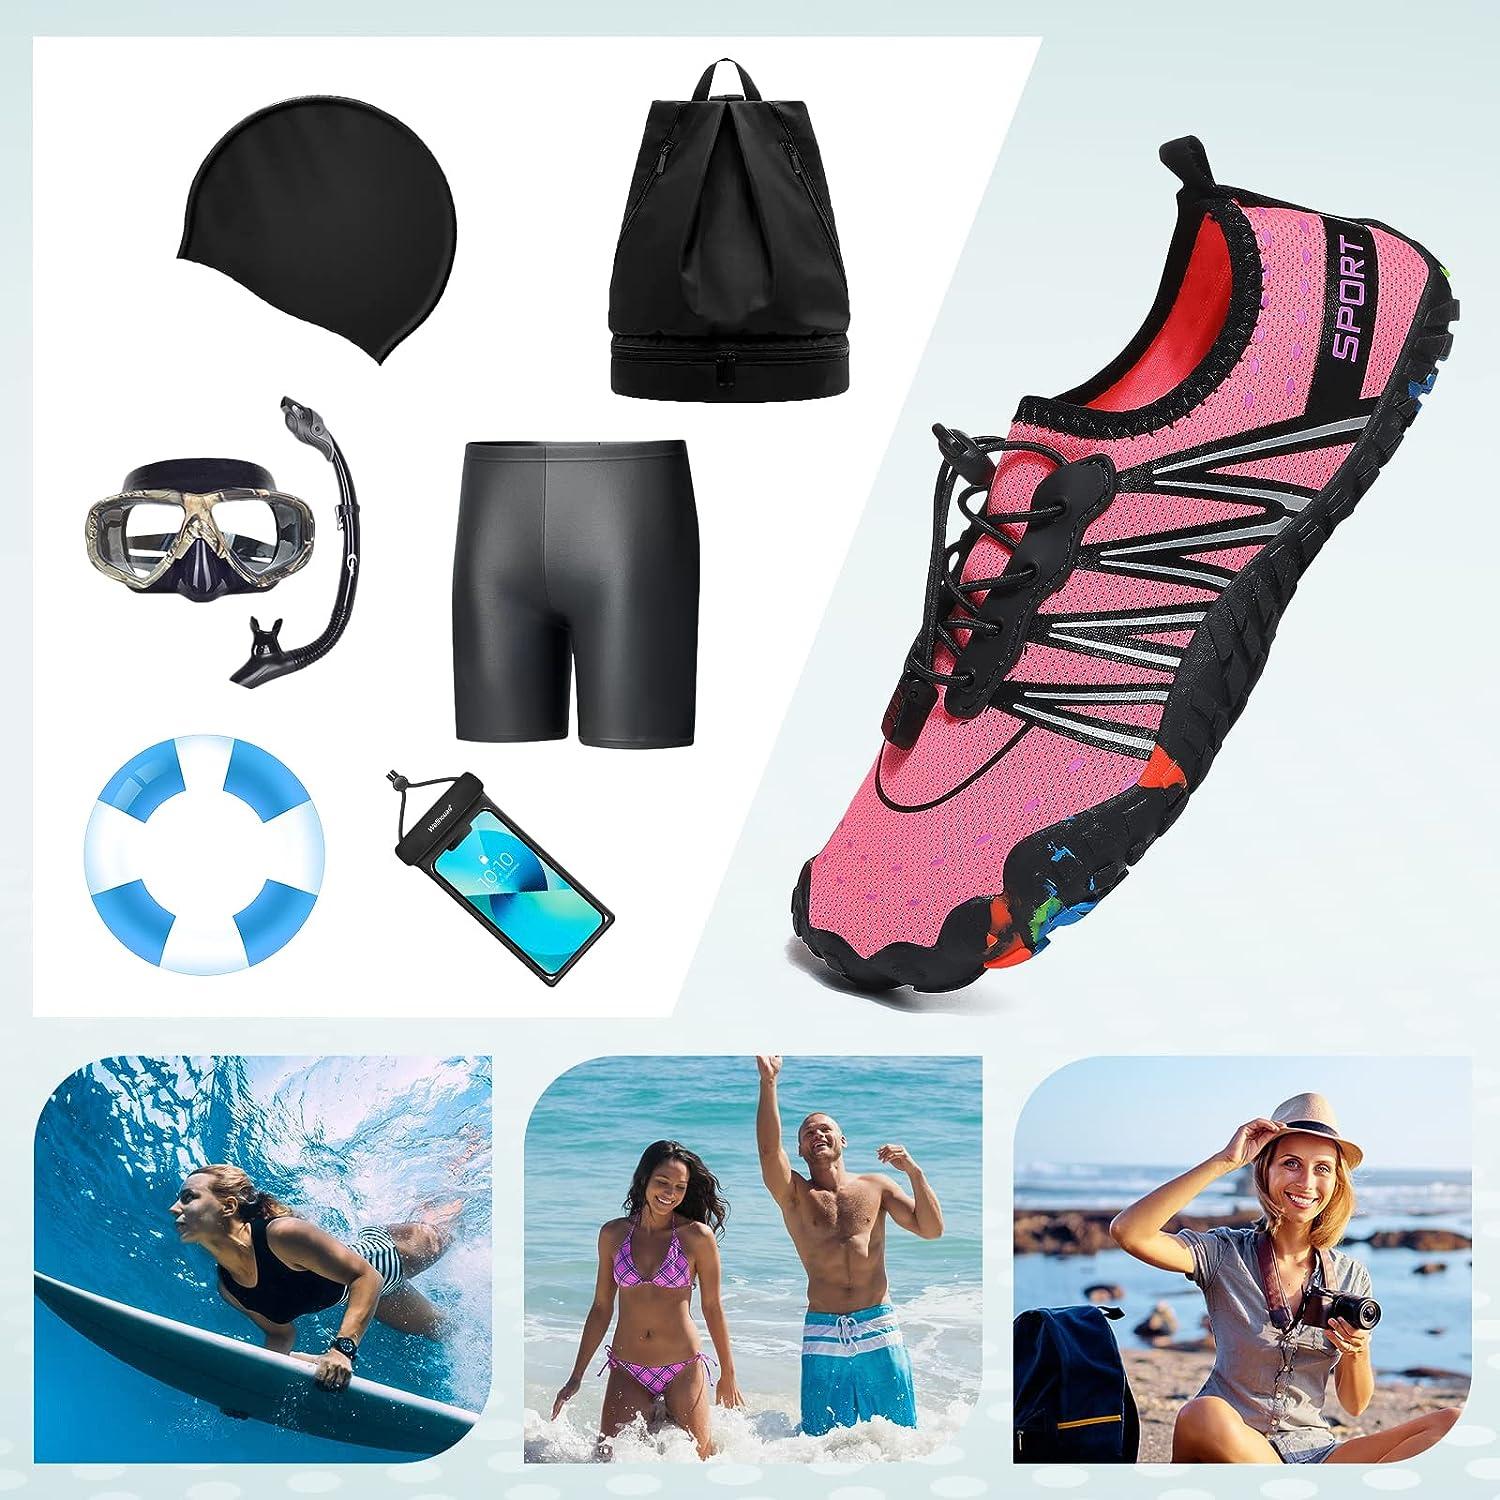 ziitop Water Shoes for Men Women Beach Barefoot Swim Rock Climbing Pool  Shoes Socks, Anti-Slip Breathable Quick Dry Lightweight Slip-on, Outdoor  Sport Hiking Walking Boating Fishing Diving Surfing 7.5 Women/6.5 Men Pink